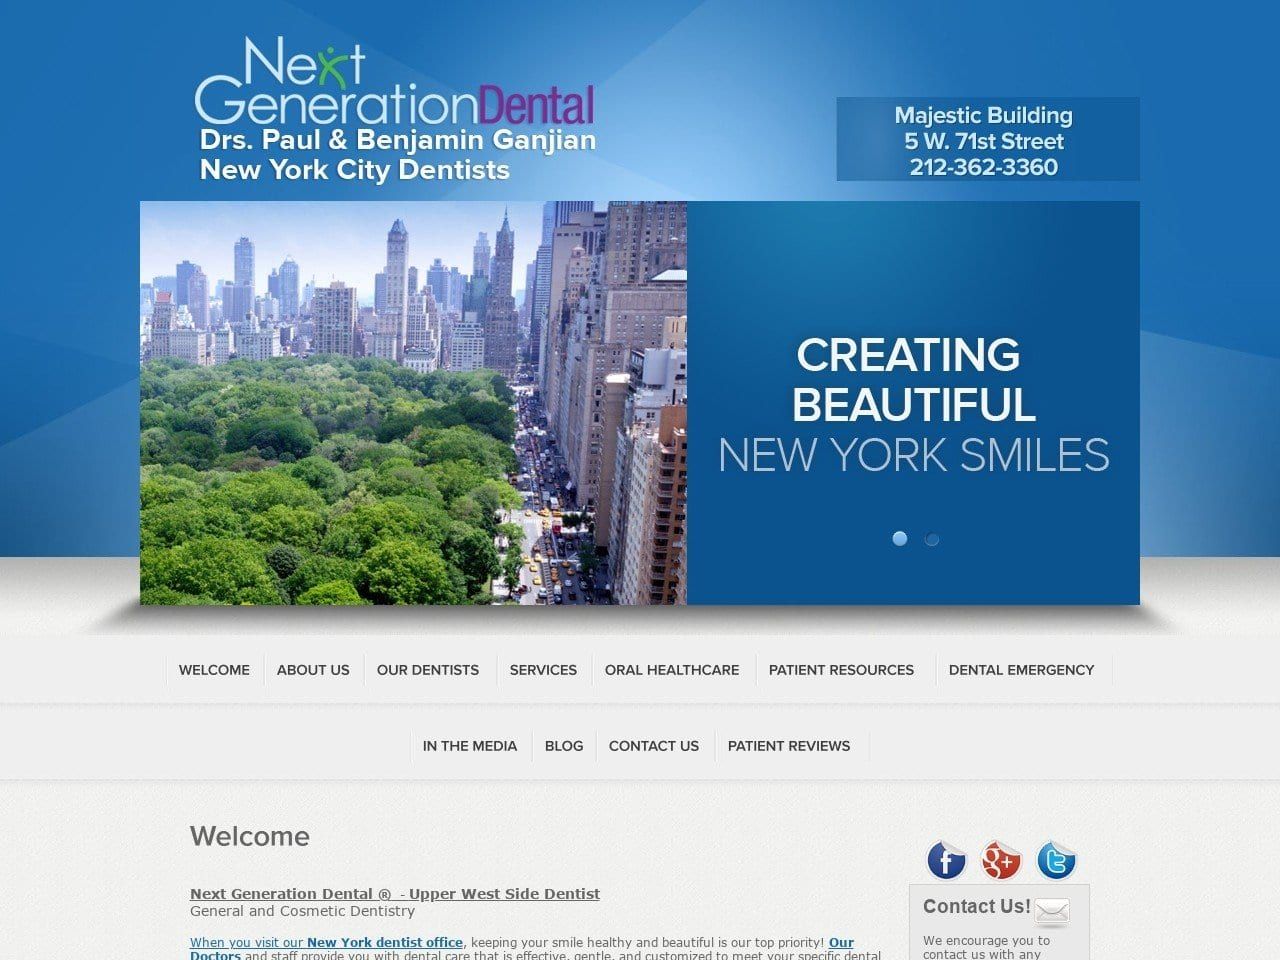 Next Generation Dental Website Screenshot from nxdental.com